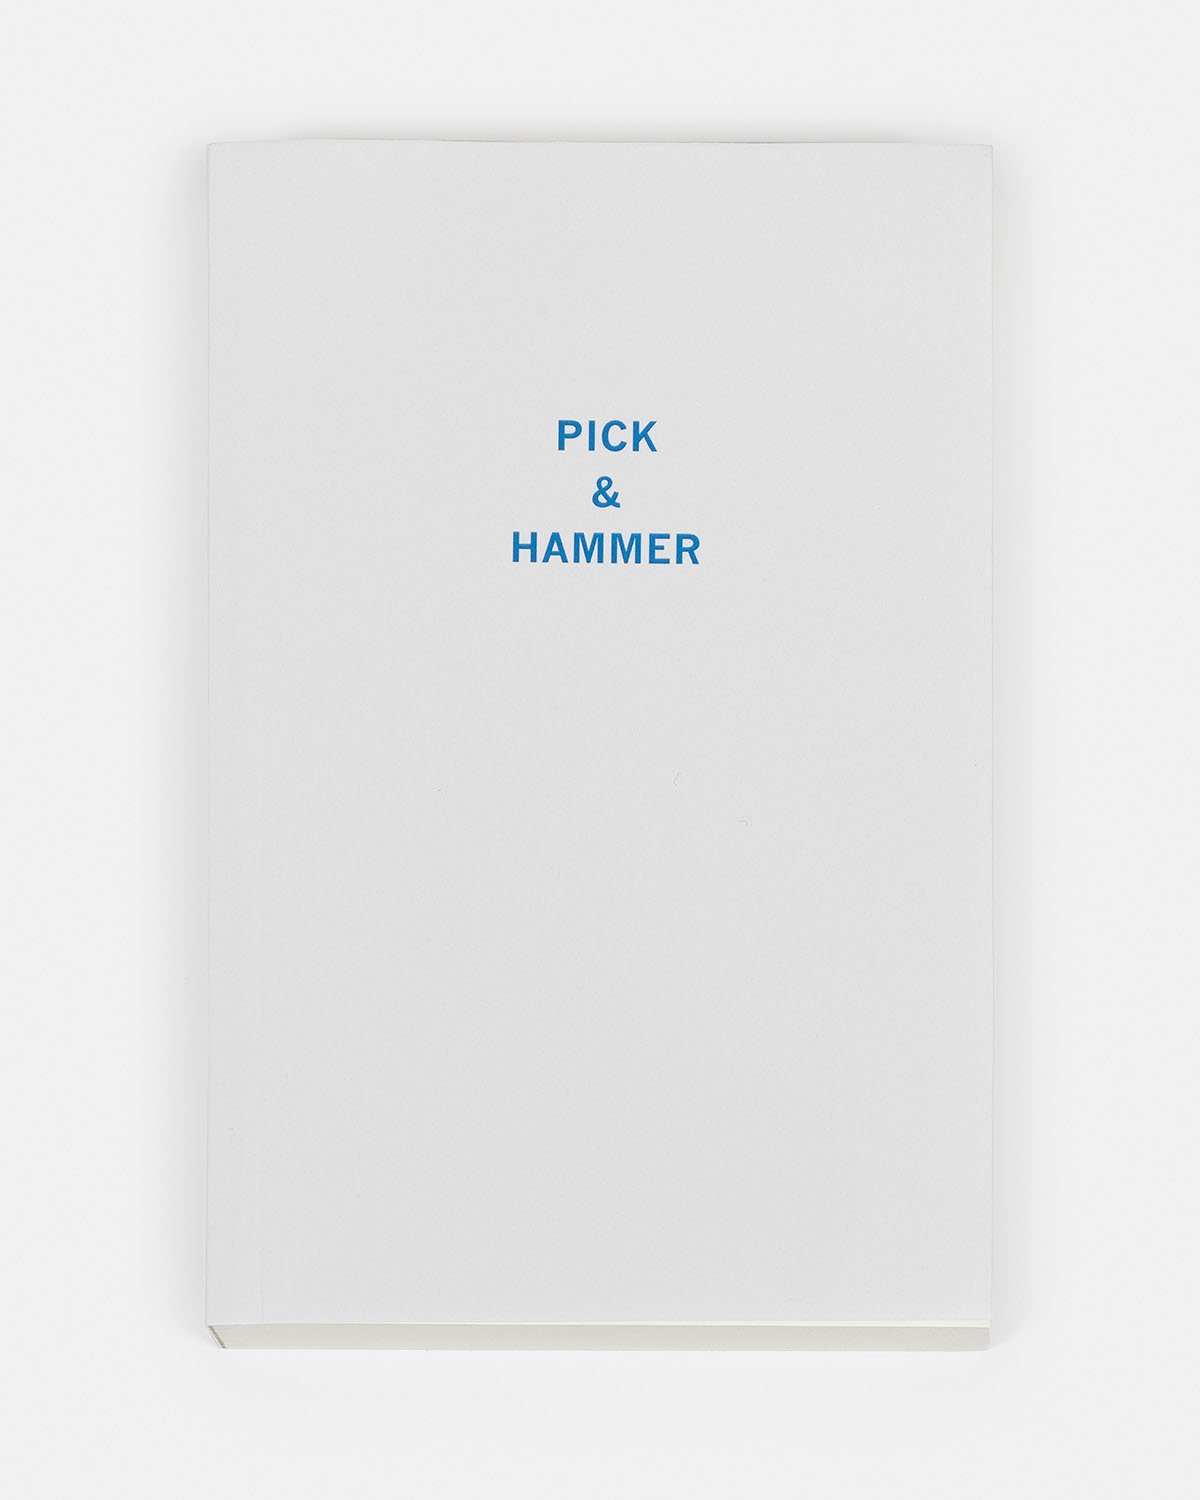 Pick & Hammer, 2015 - Vue suppl&eacute;mentaire